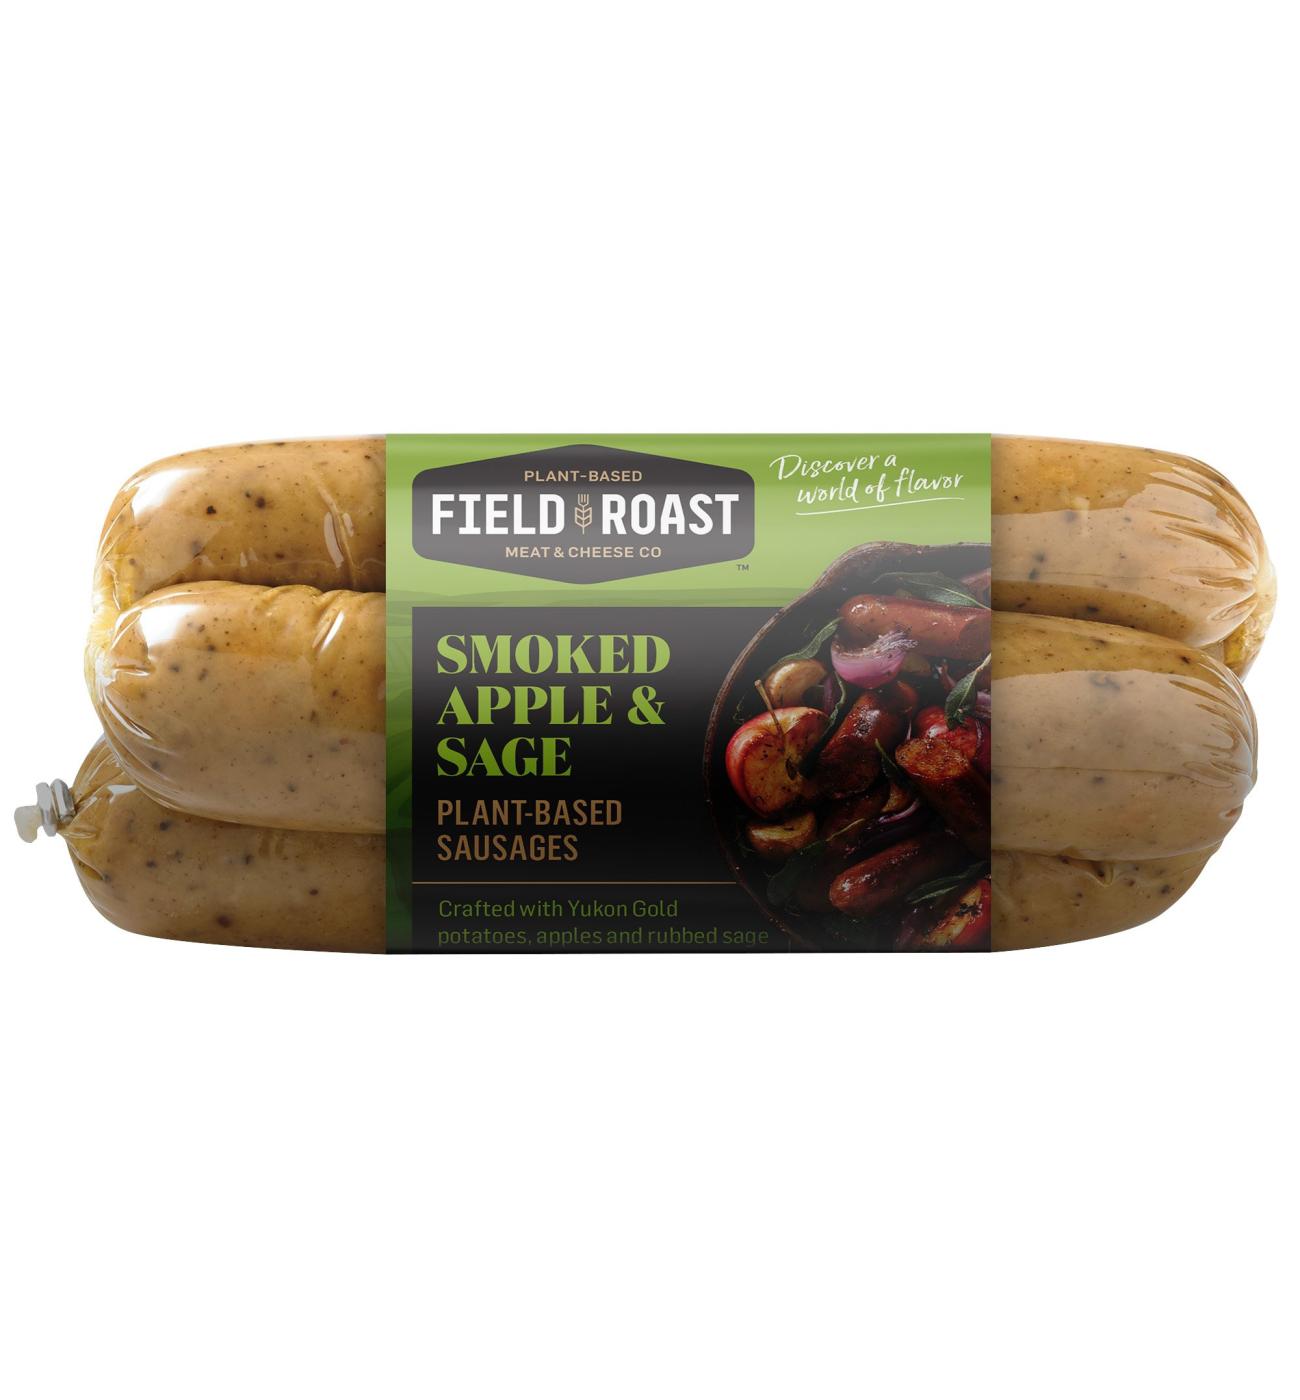 Field Roast Smoked Apple & Sage Plant-Based Sausages; image 2 of 2